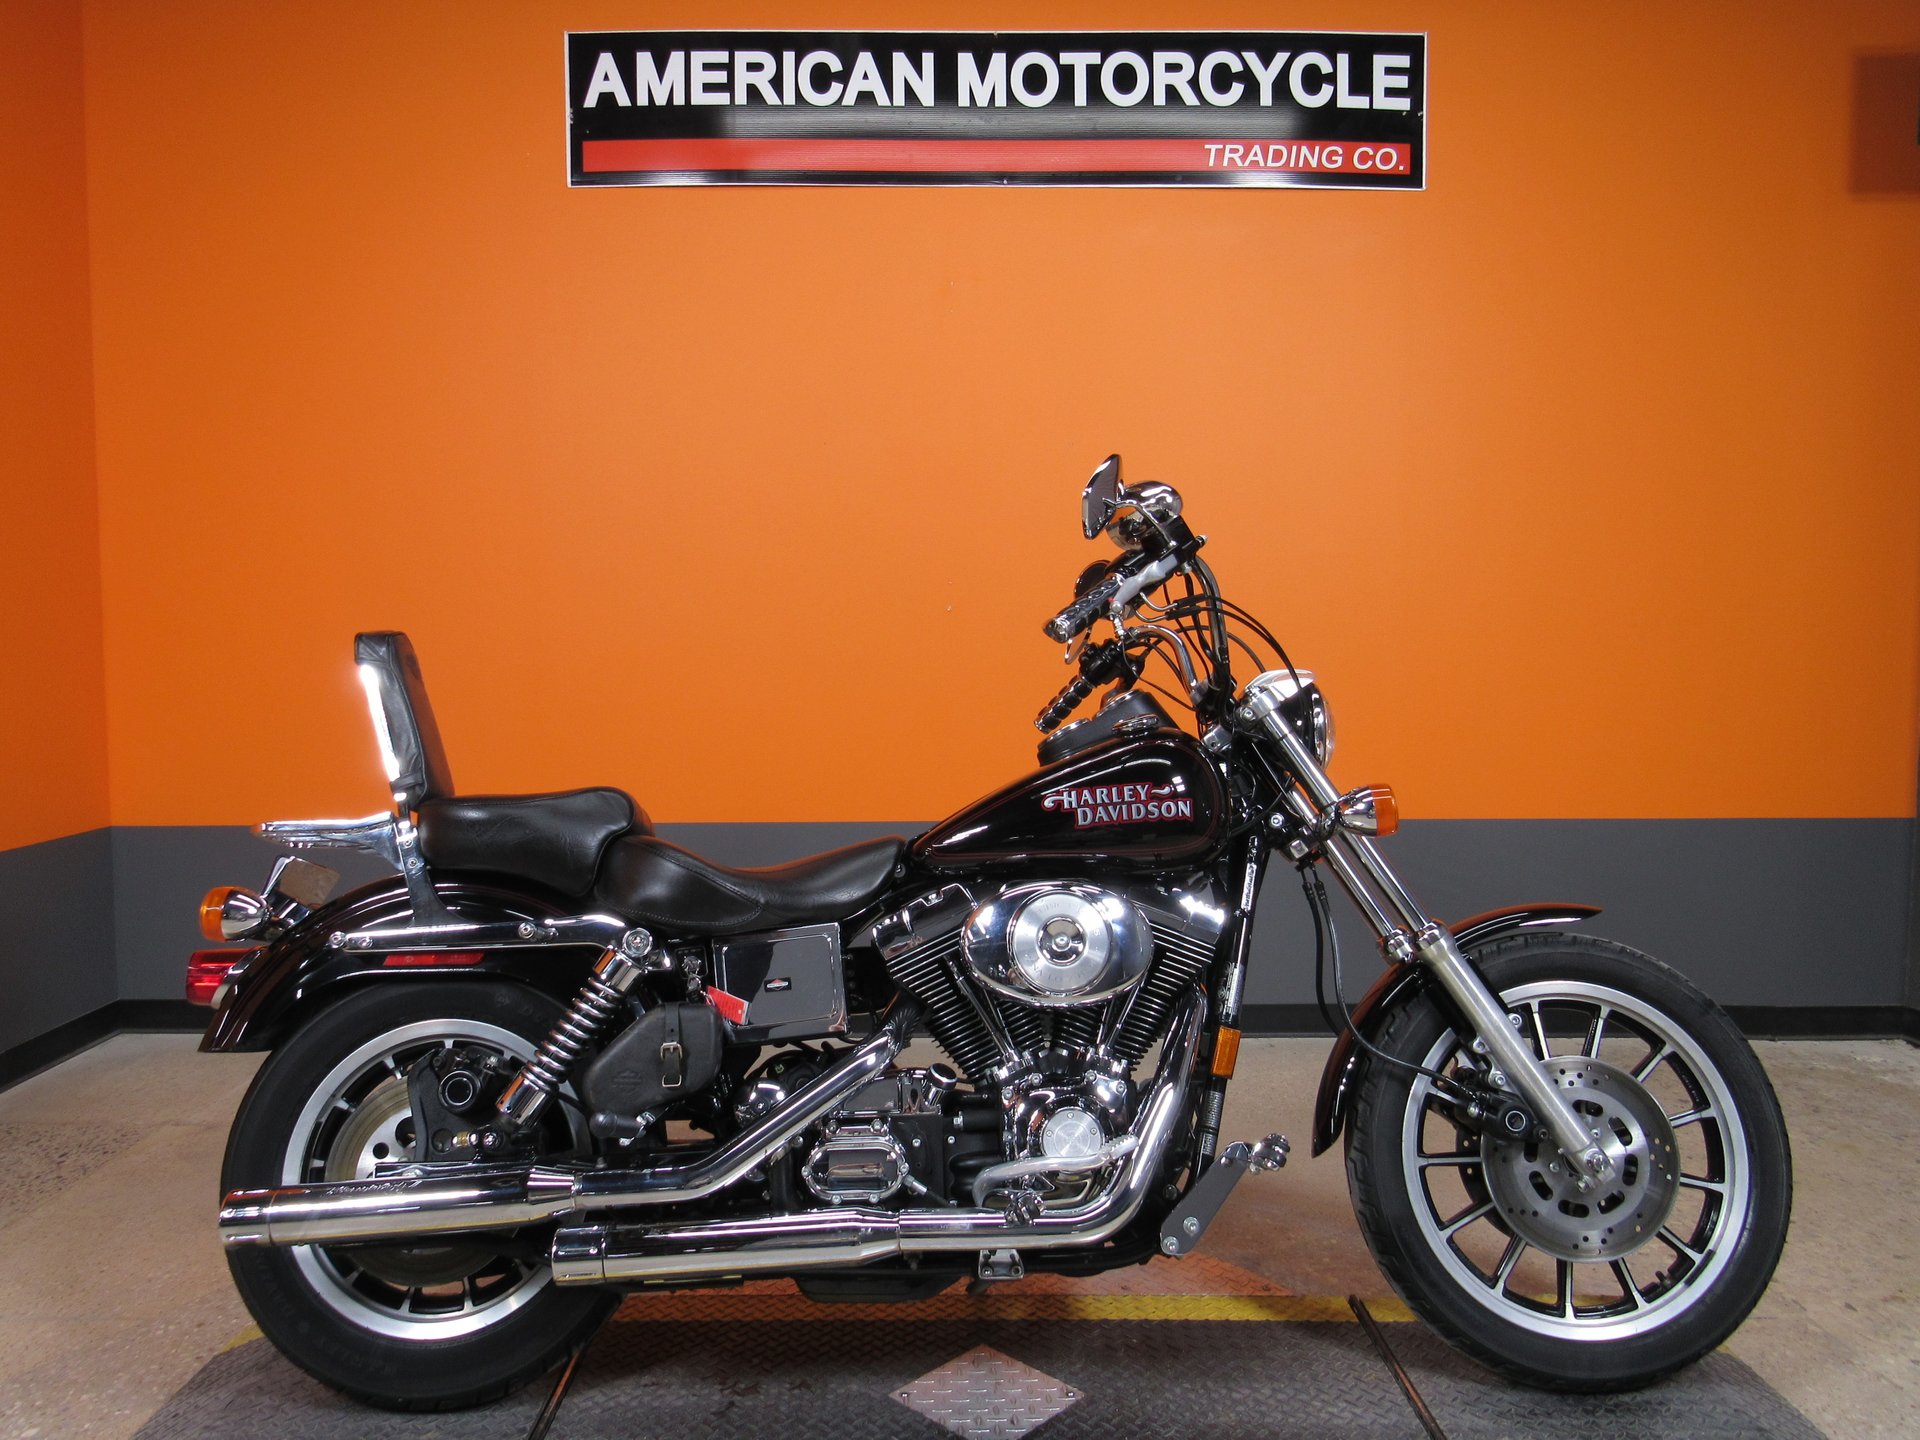 1999 Harley Davidson Dyna Low Rider American Motorcycle Trading Company Used Harley Davidson Motorcycles